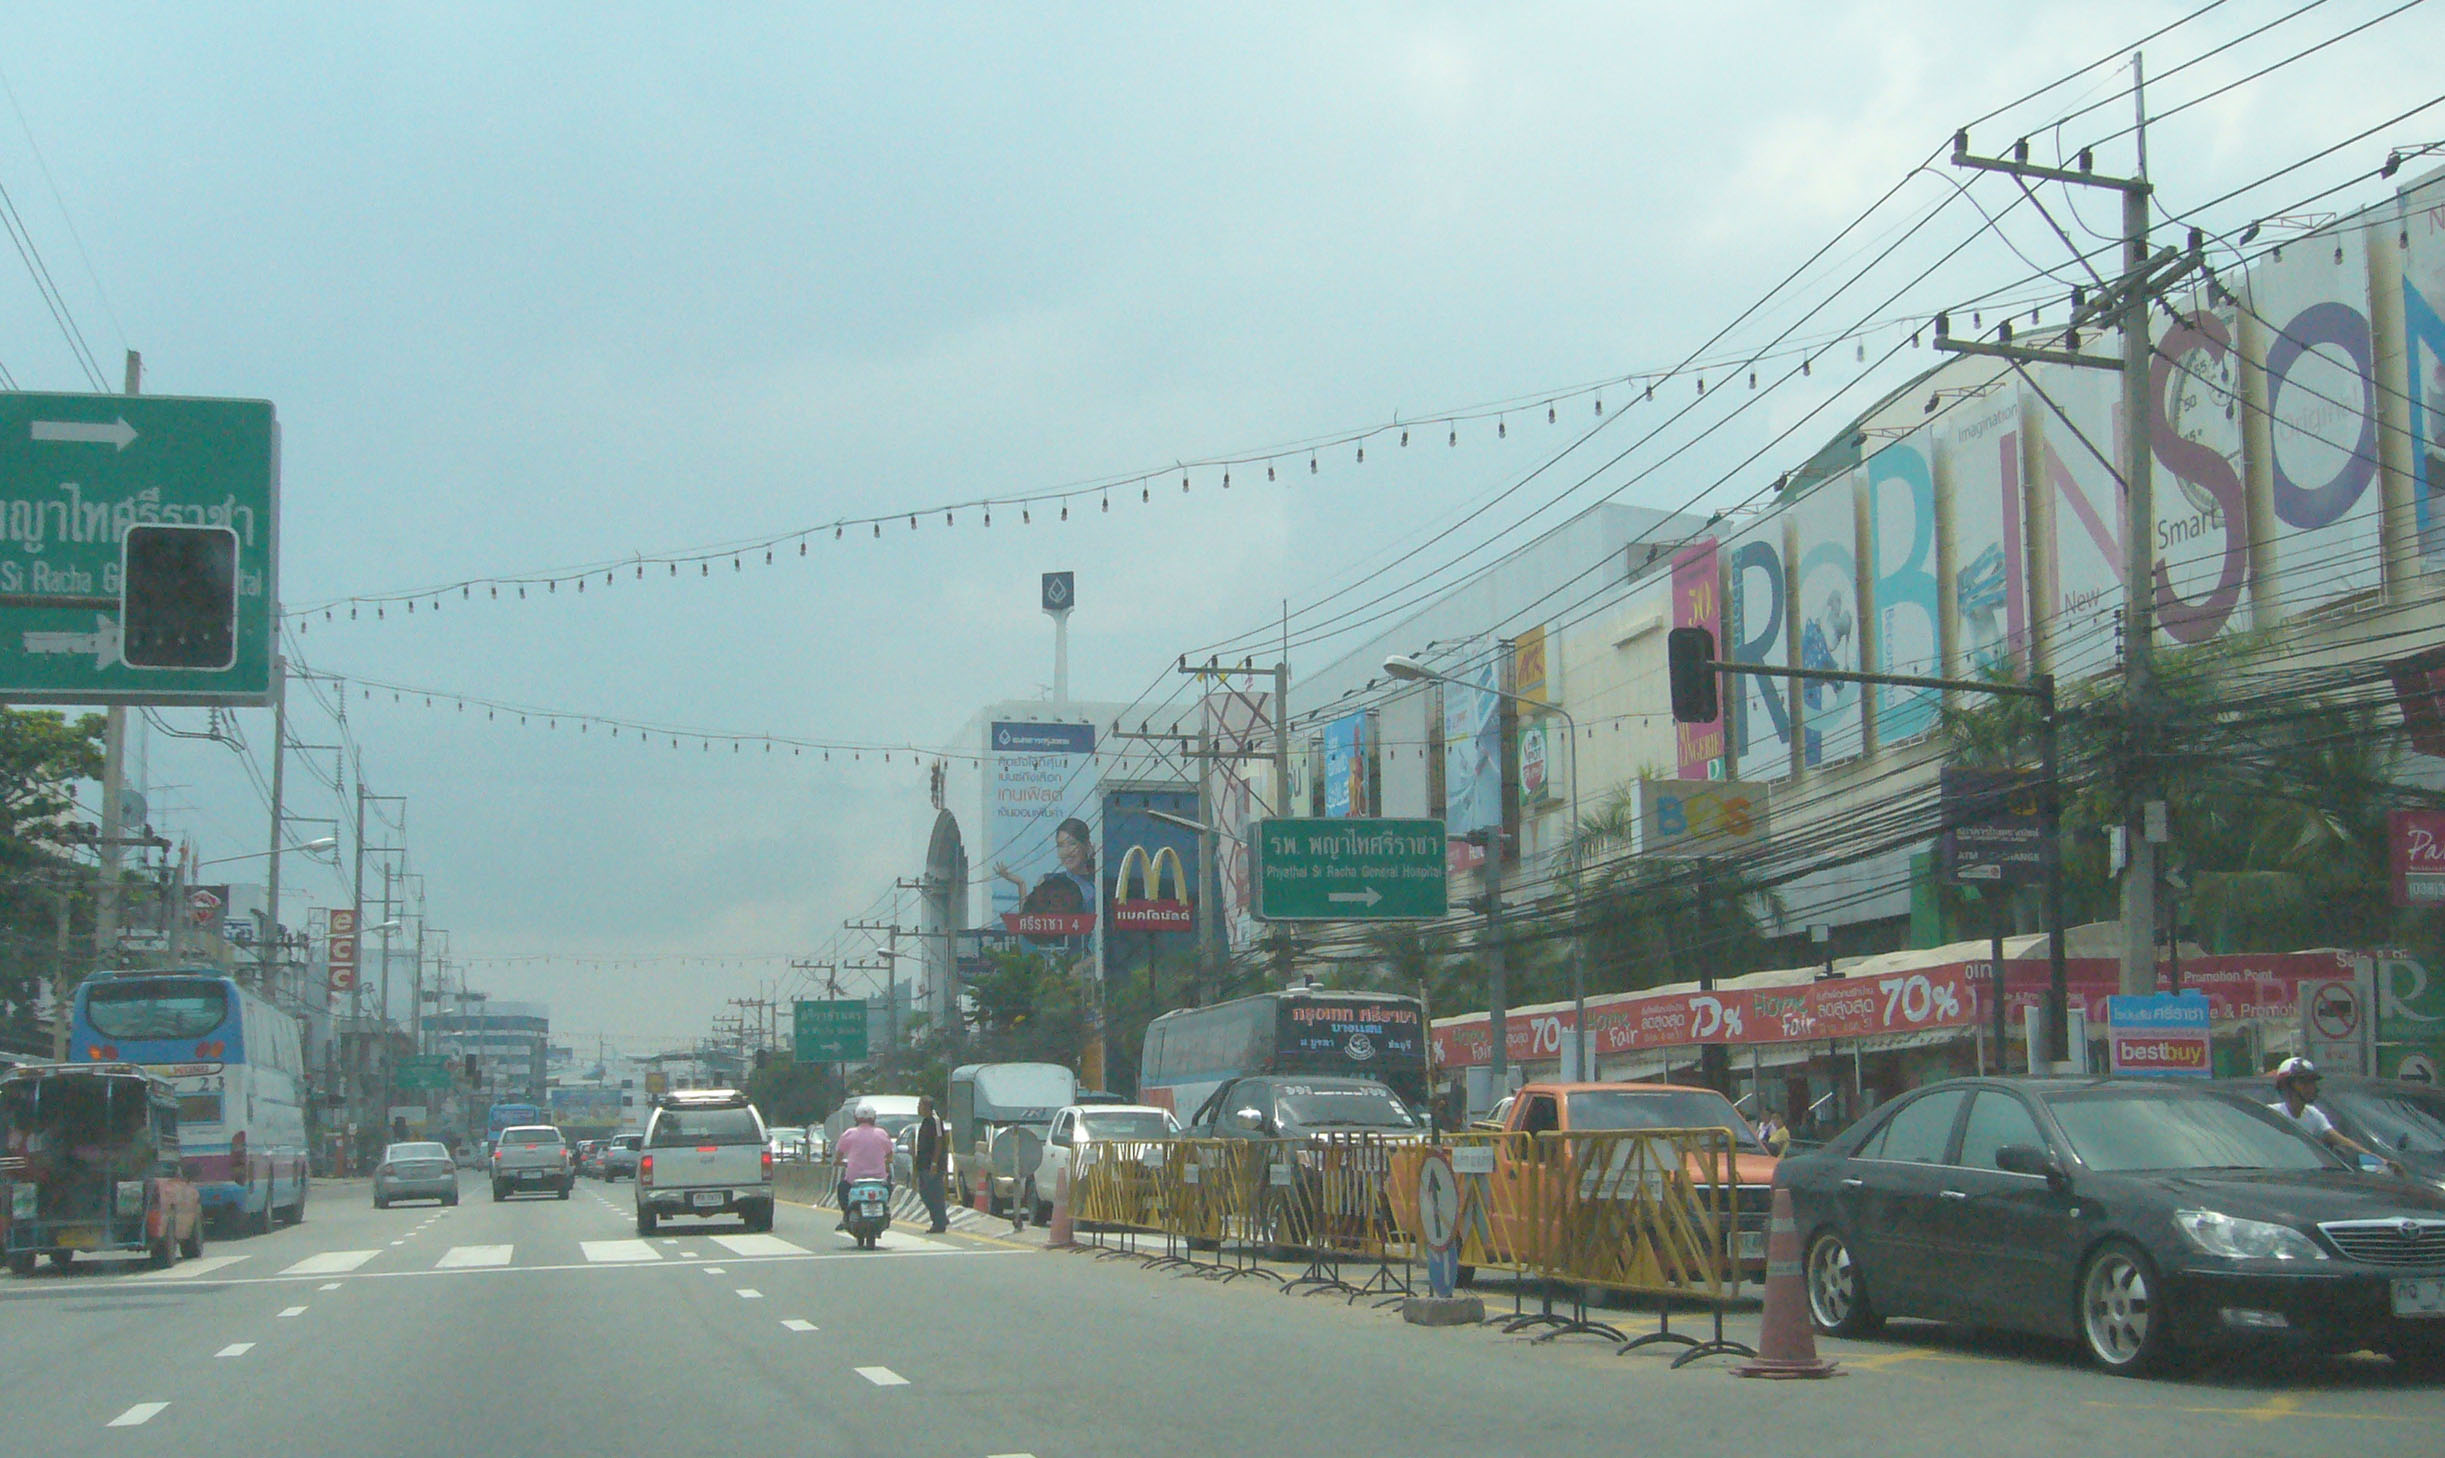 Bedrift sekundær Hele tiden File:Main Road in Si Racha.jpg - Wikimedia Commons